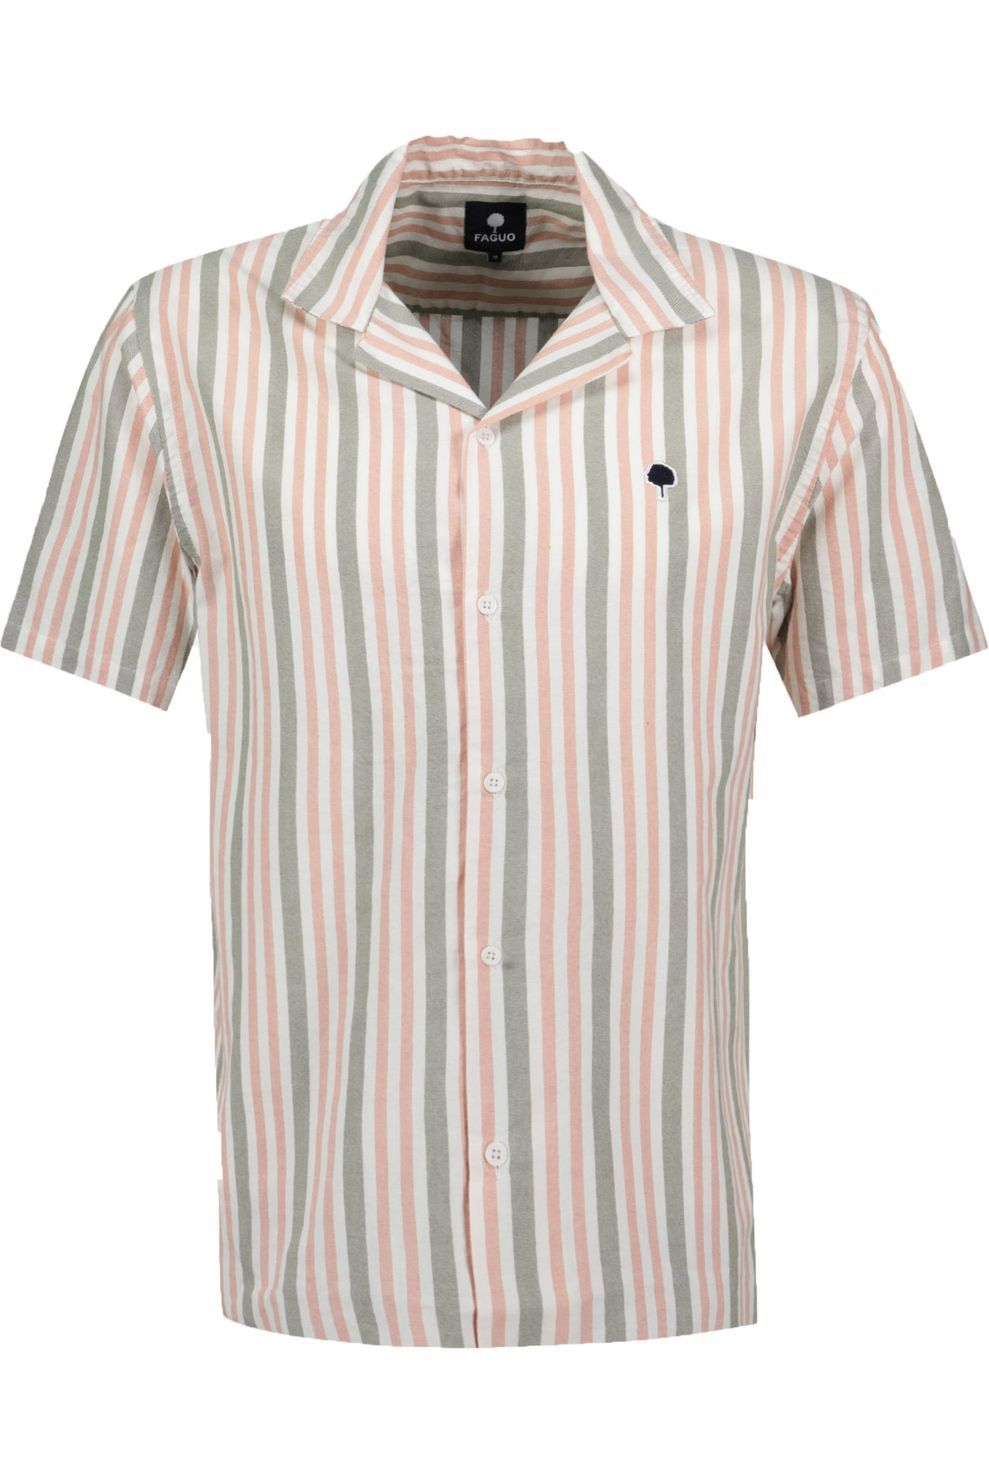 Faguo_Shirt FAG Vimy Shirts stripes_JUTTU_€75